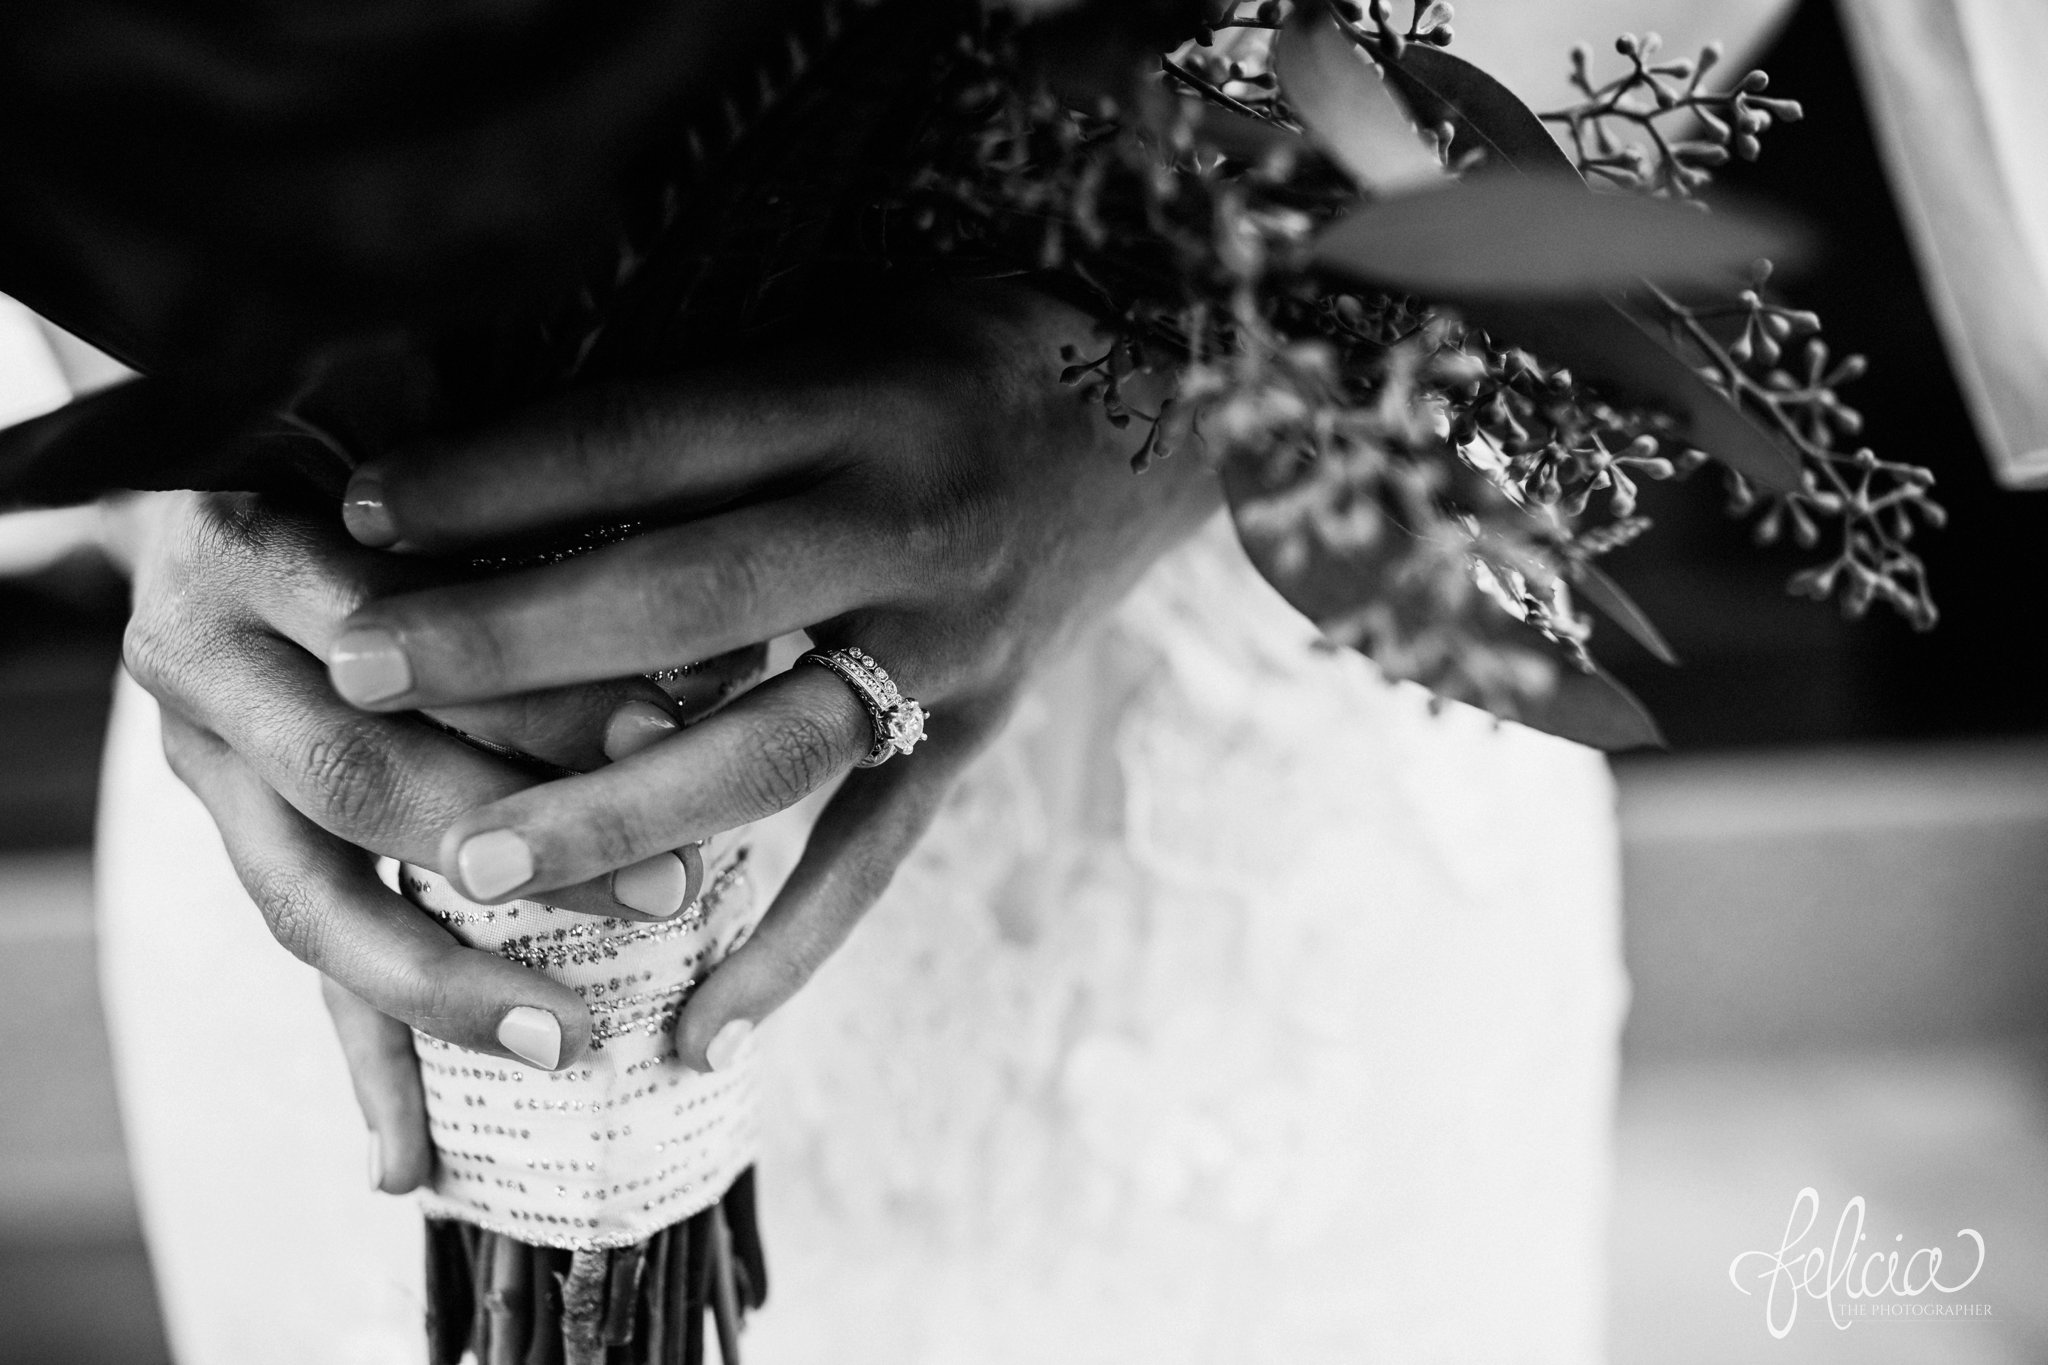 images by feliciathephotographer.com | wedding photographer | kansas city | details | bouquet | diamond ring | shane co | lace floral dress | black and white | 